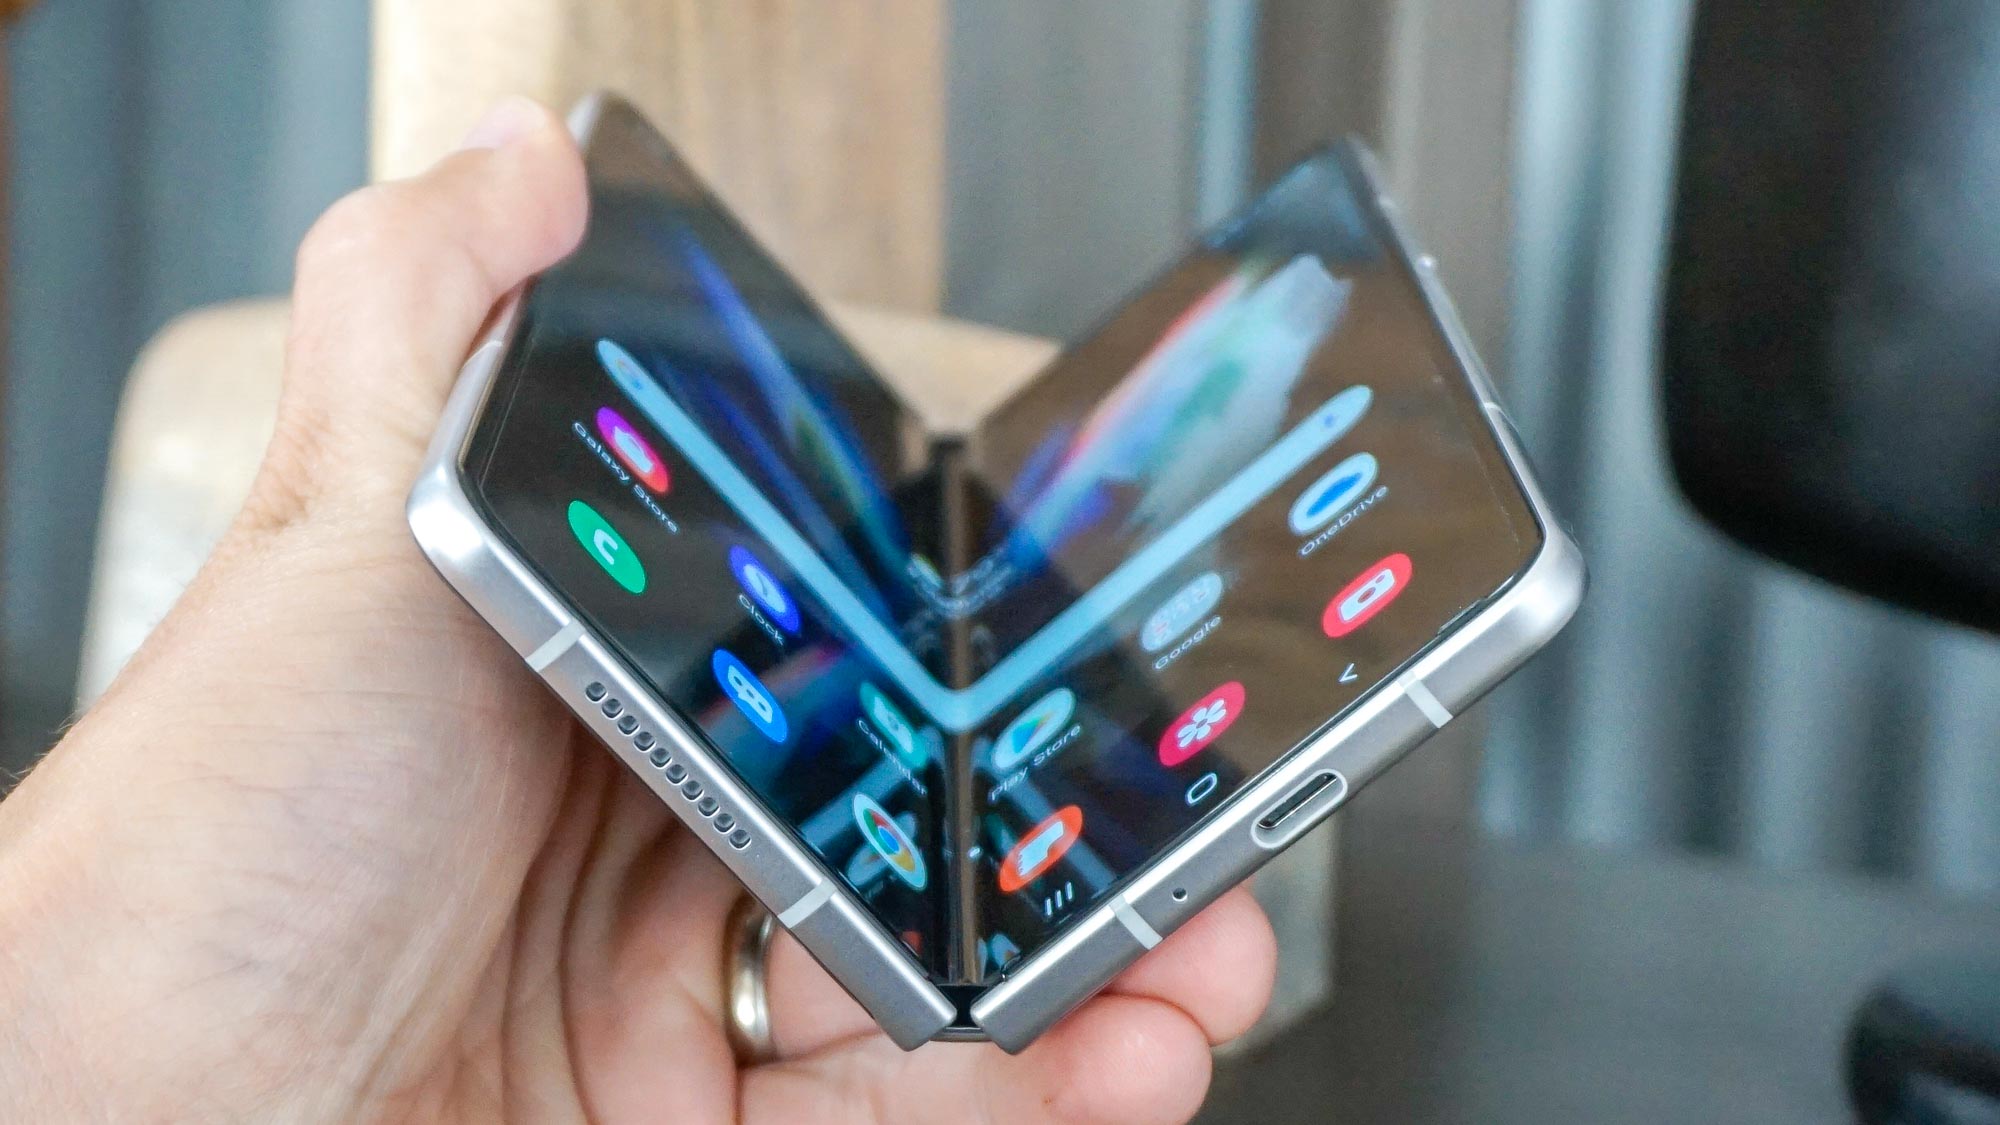 4pda Samsung Galaxy Z Fold 3